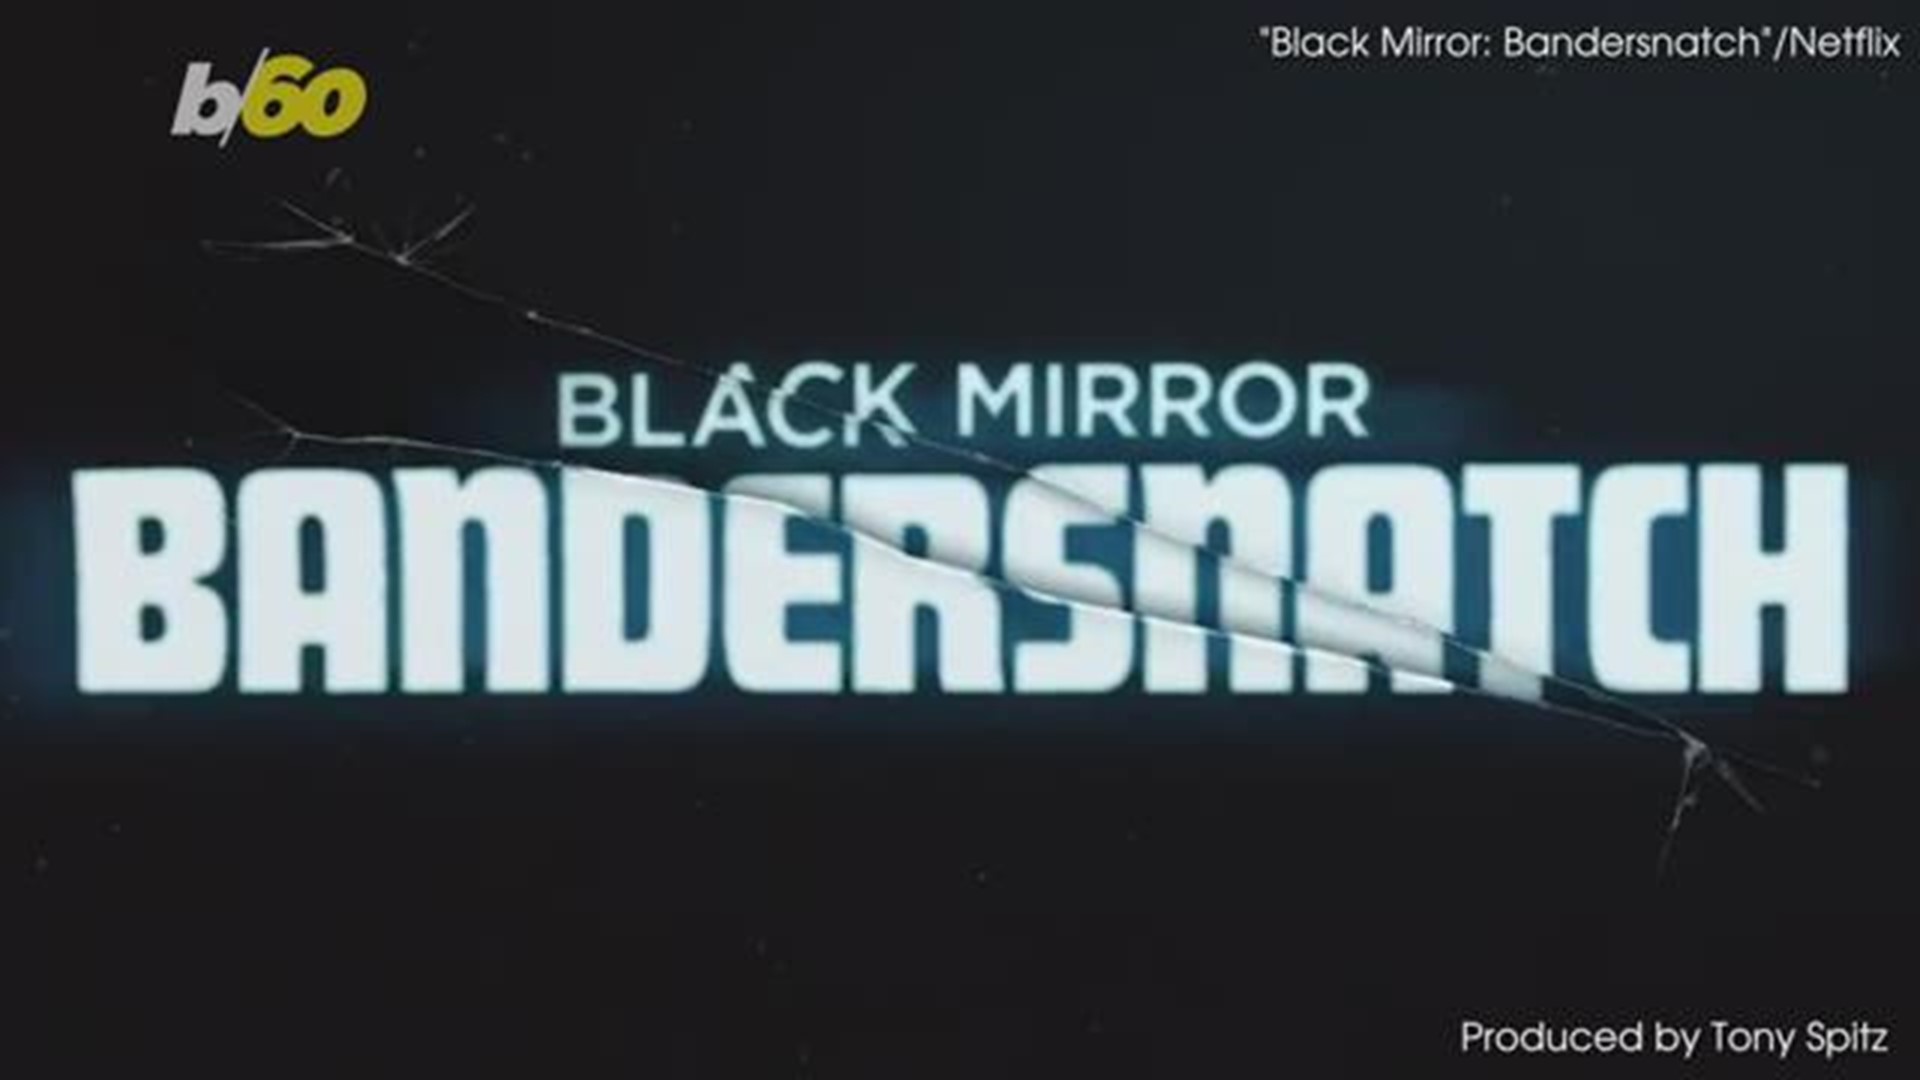 netflix releases first black mirror season 5 trailer with star studded cast 9news com 9news